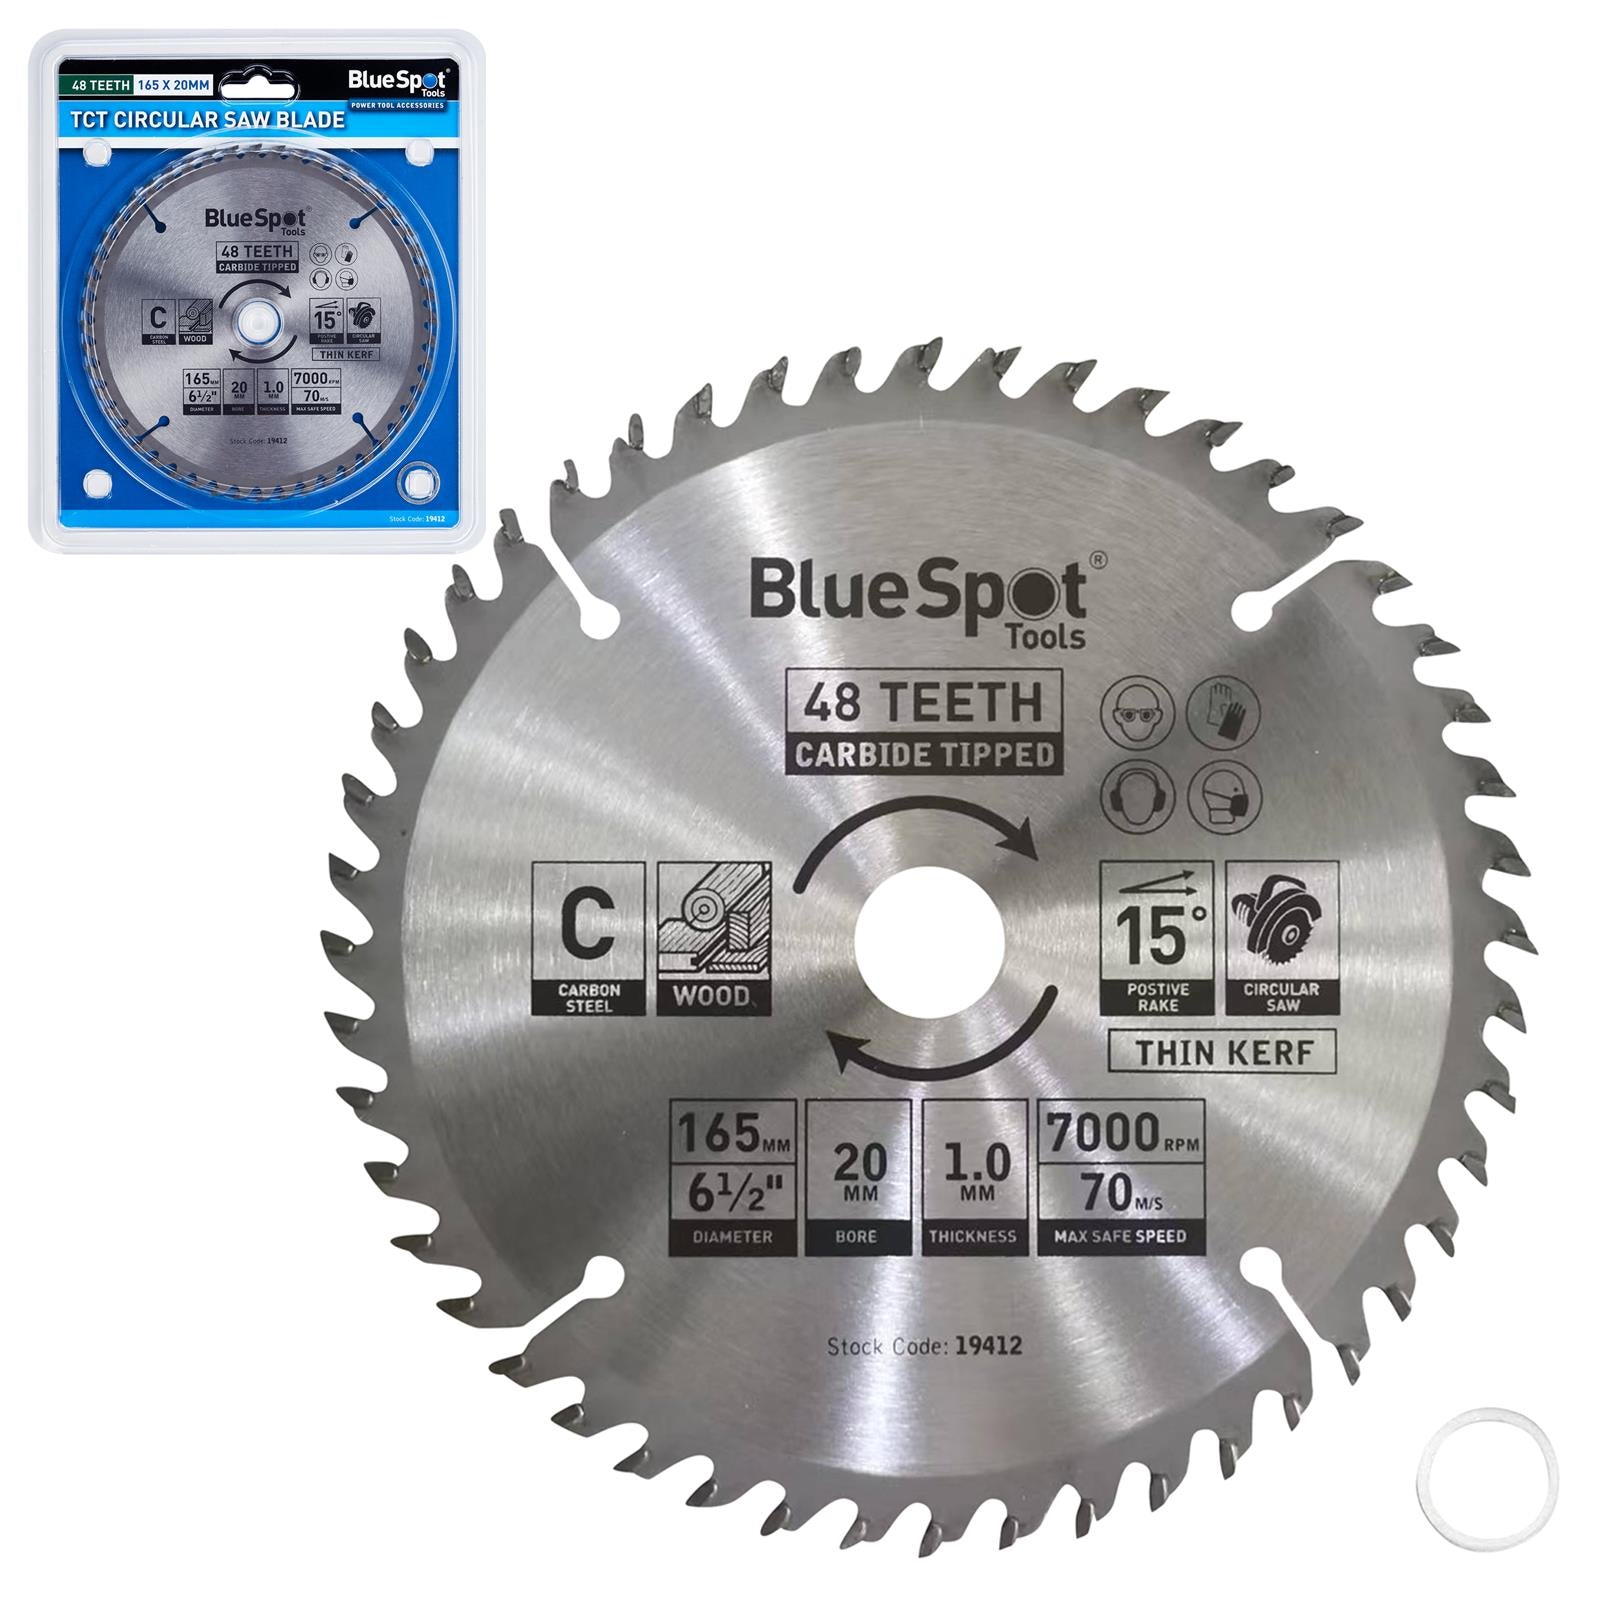 BlueSpot TCT Circular Saw Blade 48 Teeth 165mm x 20mm